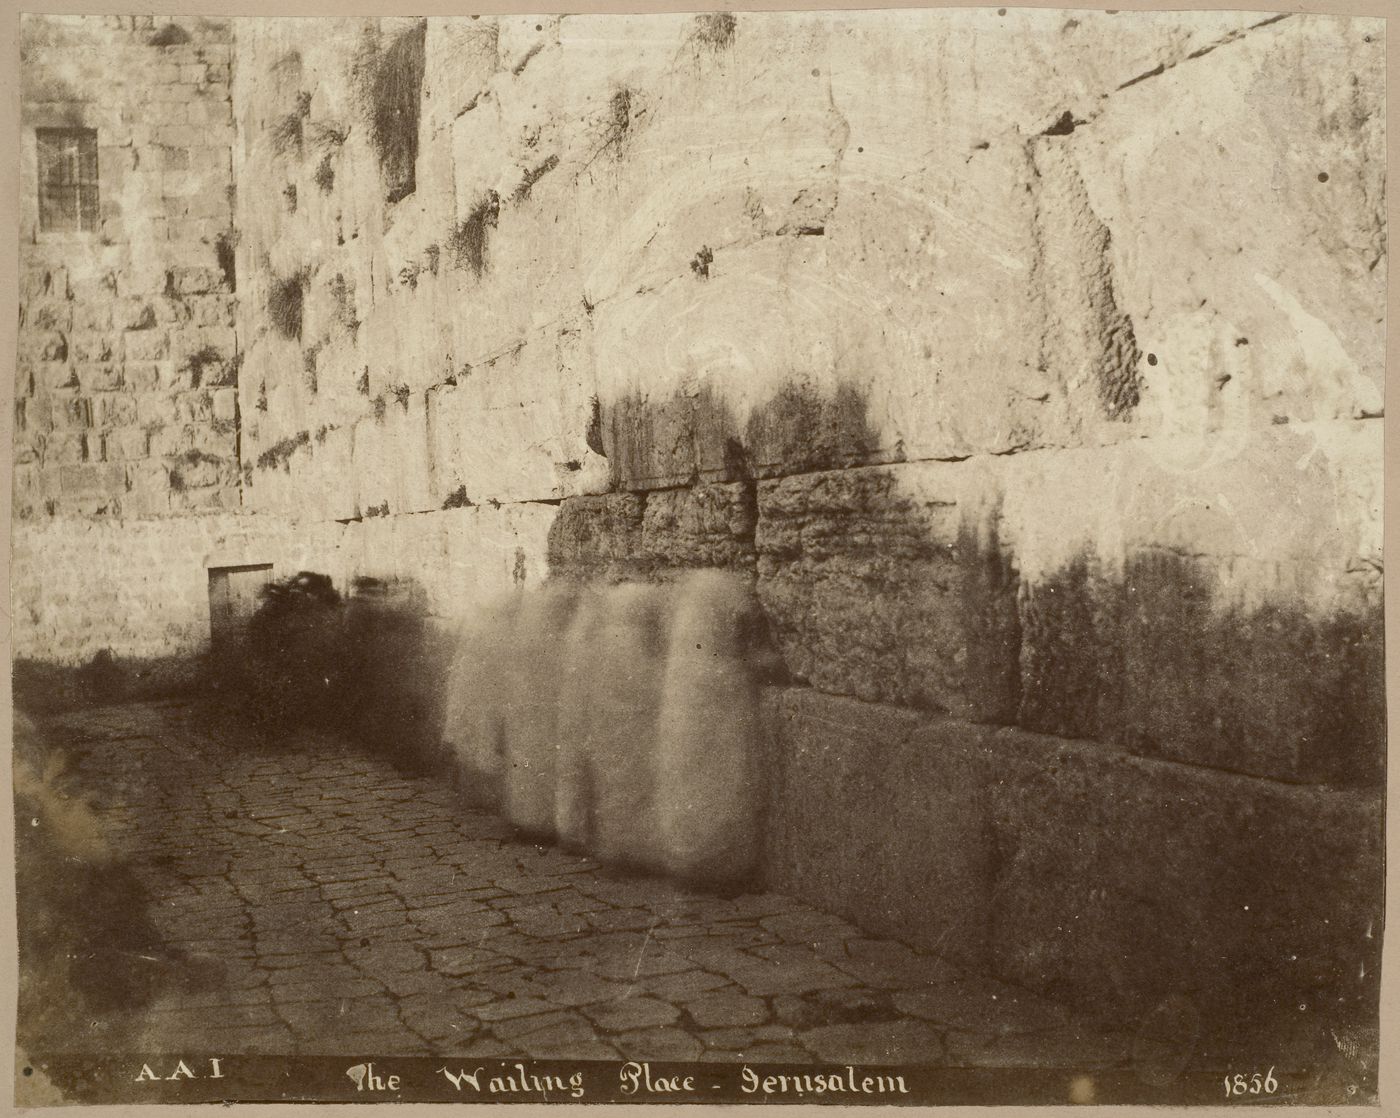 View of the Western Wall, Jerusalem, Palestine